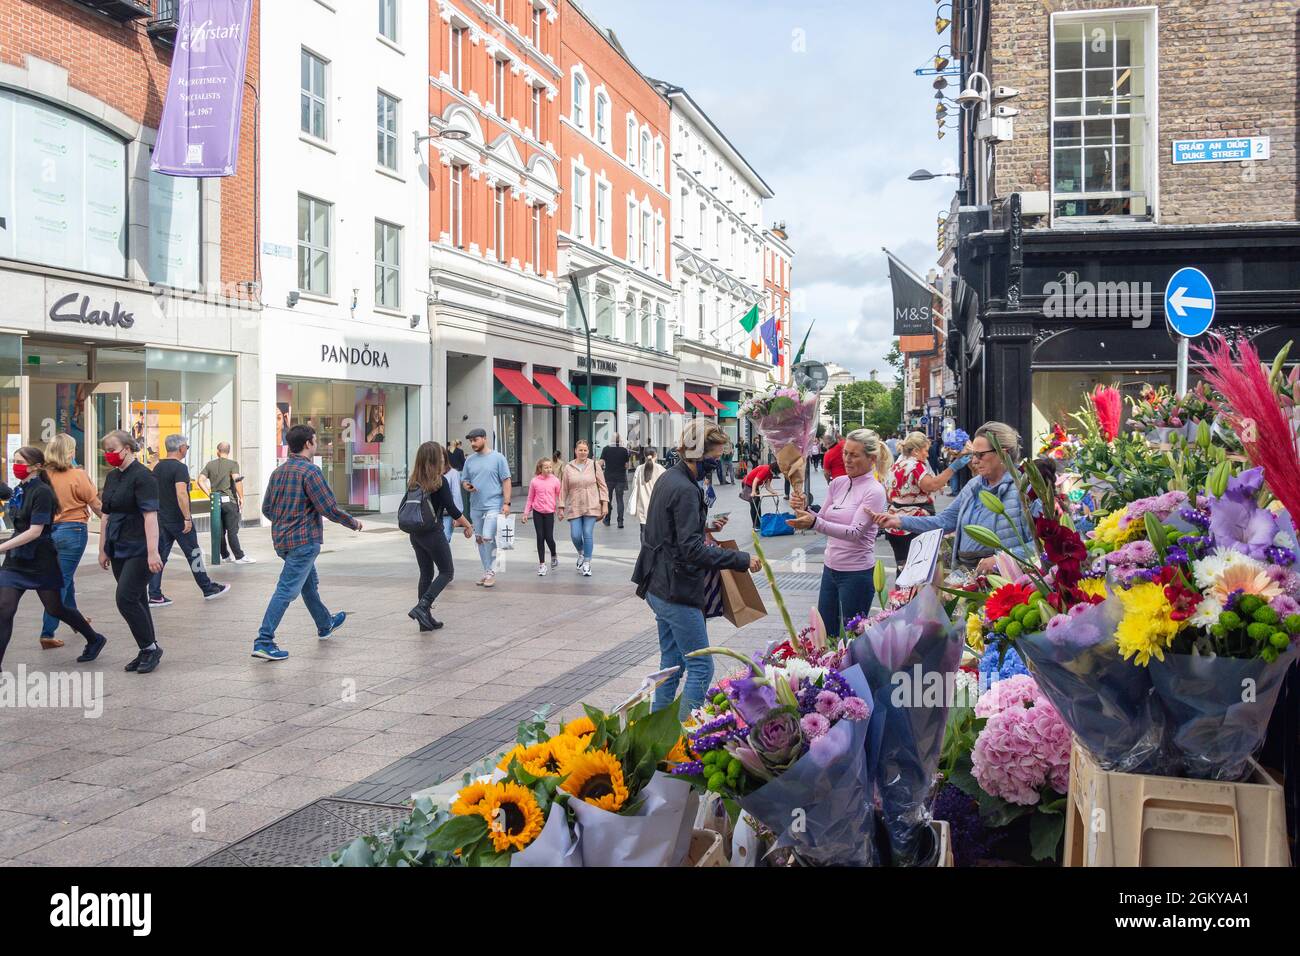 Flower stalls, Grafton Street, Dublin, Republic of Ireland Stock Photo -  Alamy